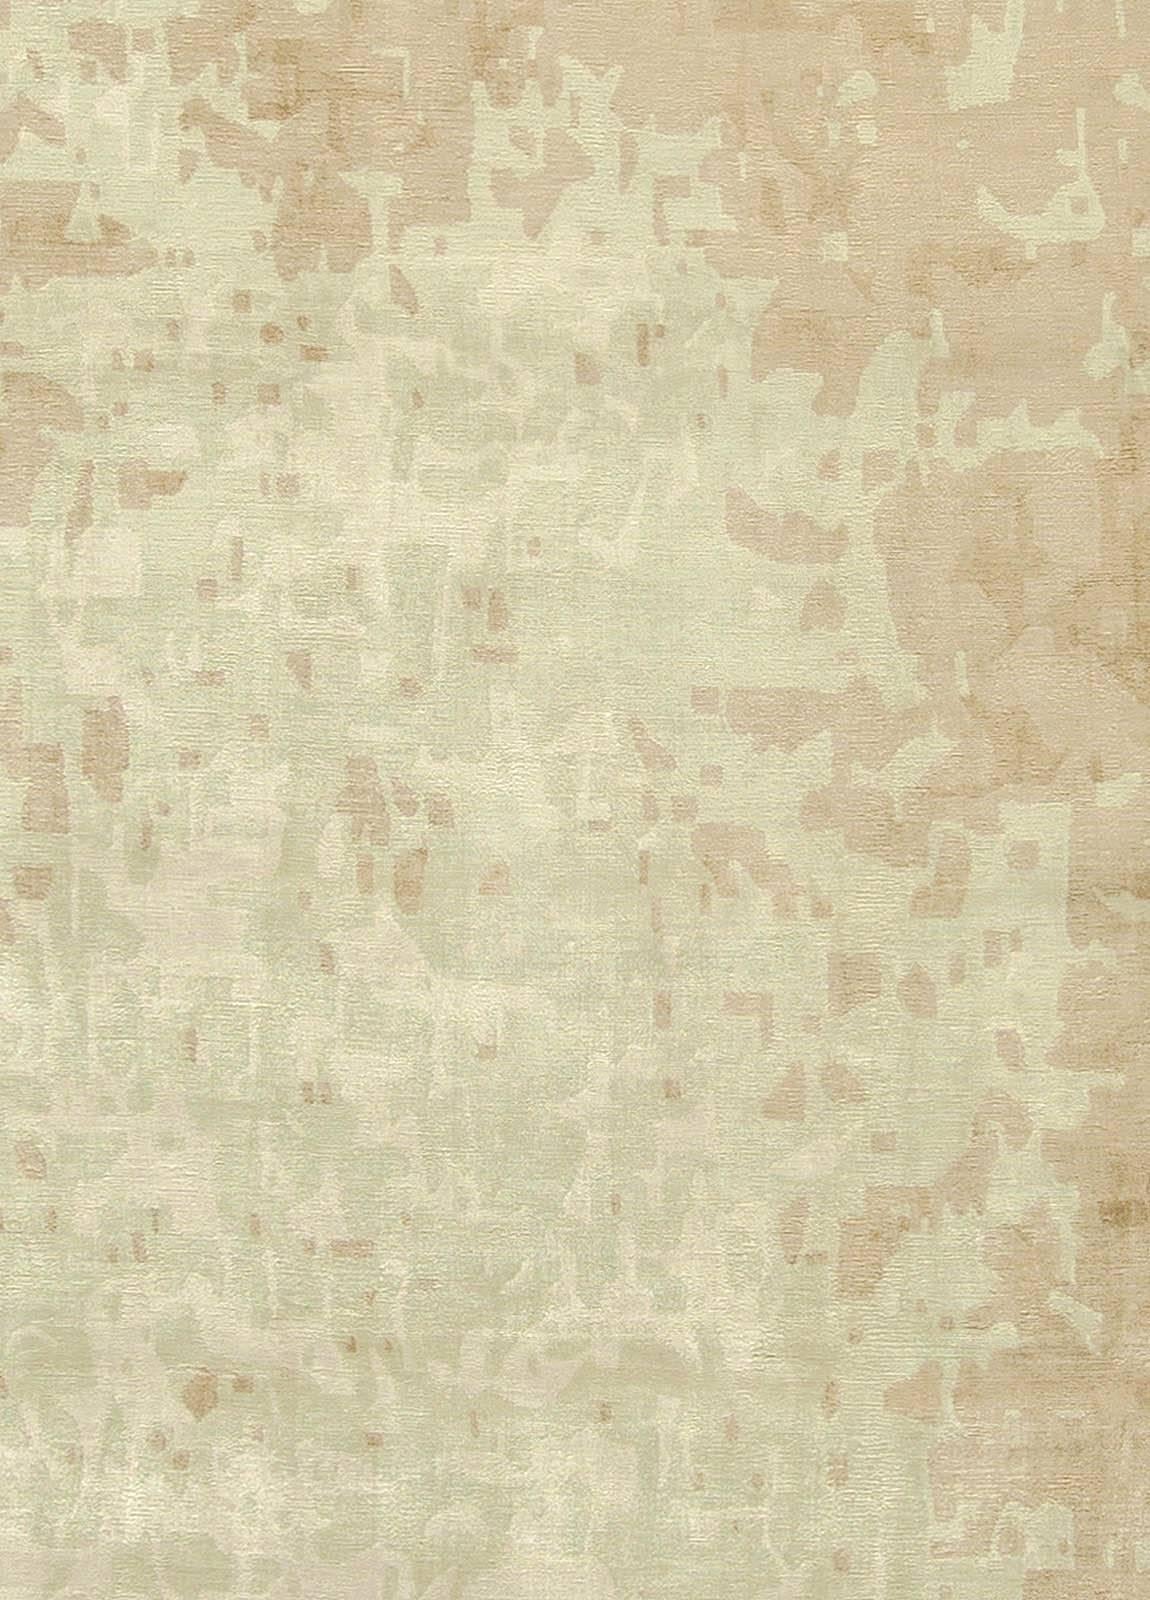 Contemporary large dusk beige handmade silk rug by Doris Leslie Blau.
Size: 14'7